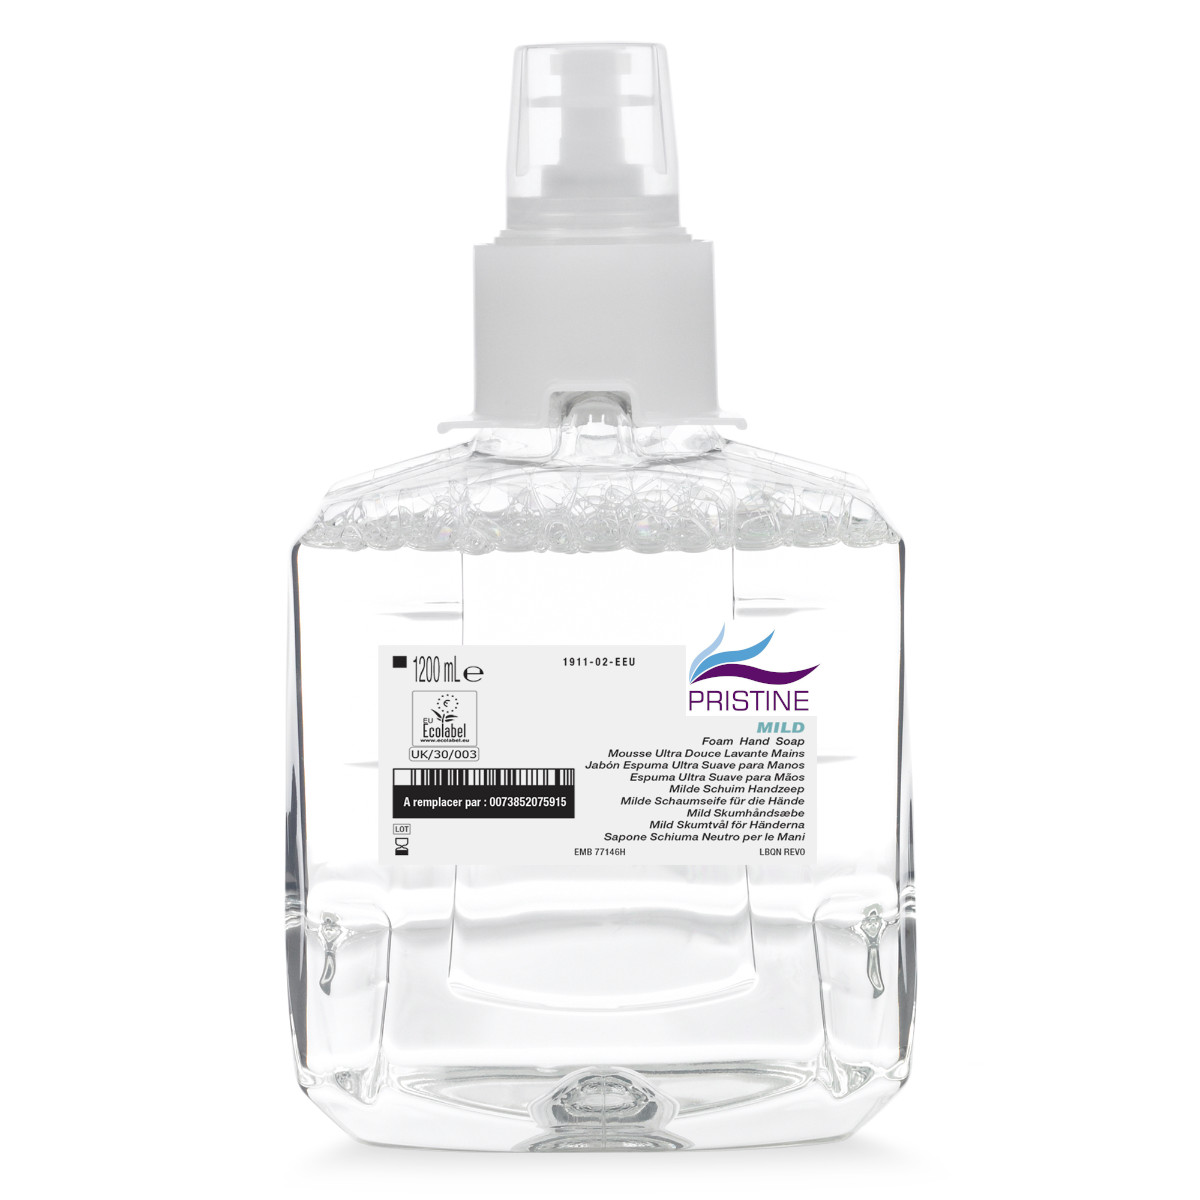 16: Pristine Mild 1200 ml., parfumefri skumsæbe til LTX-dispenser